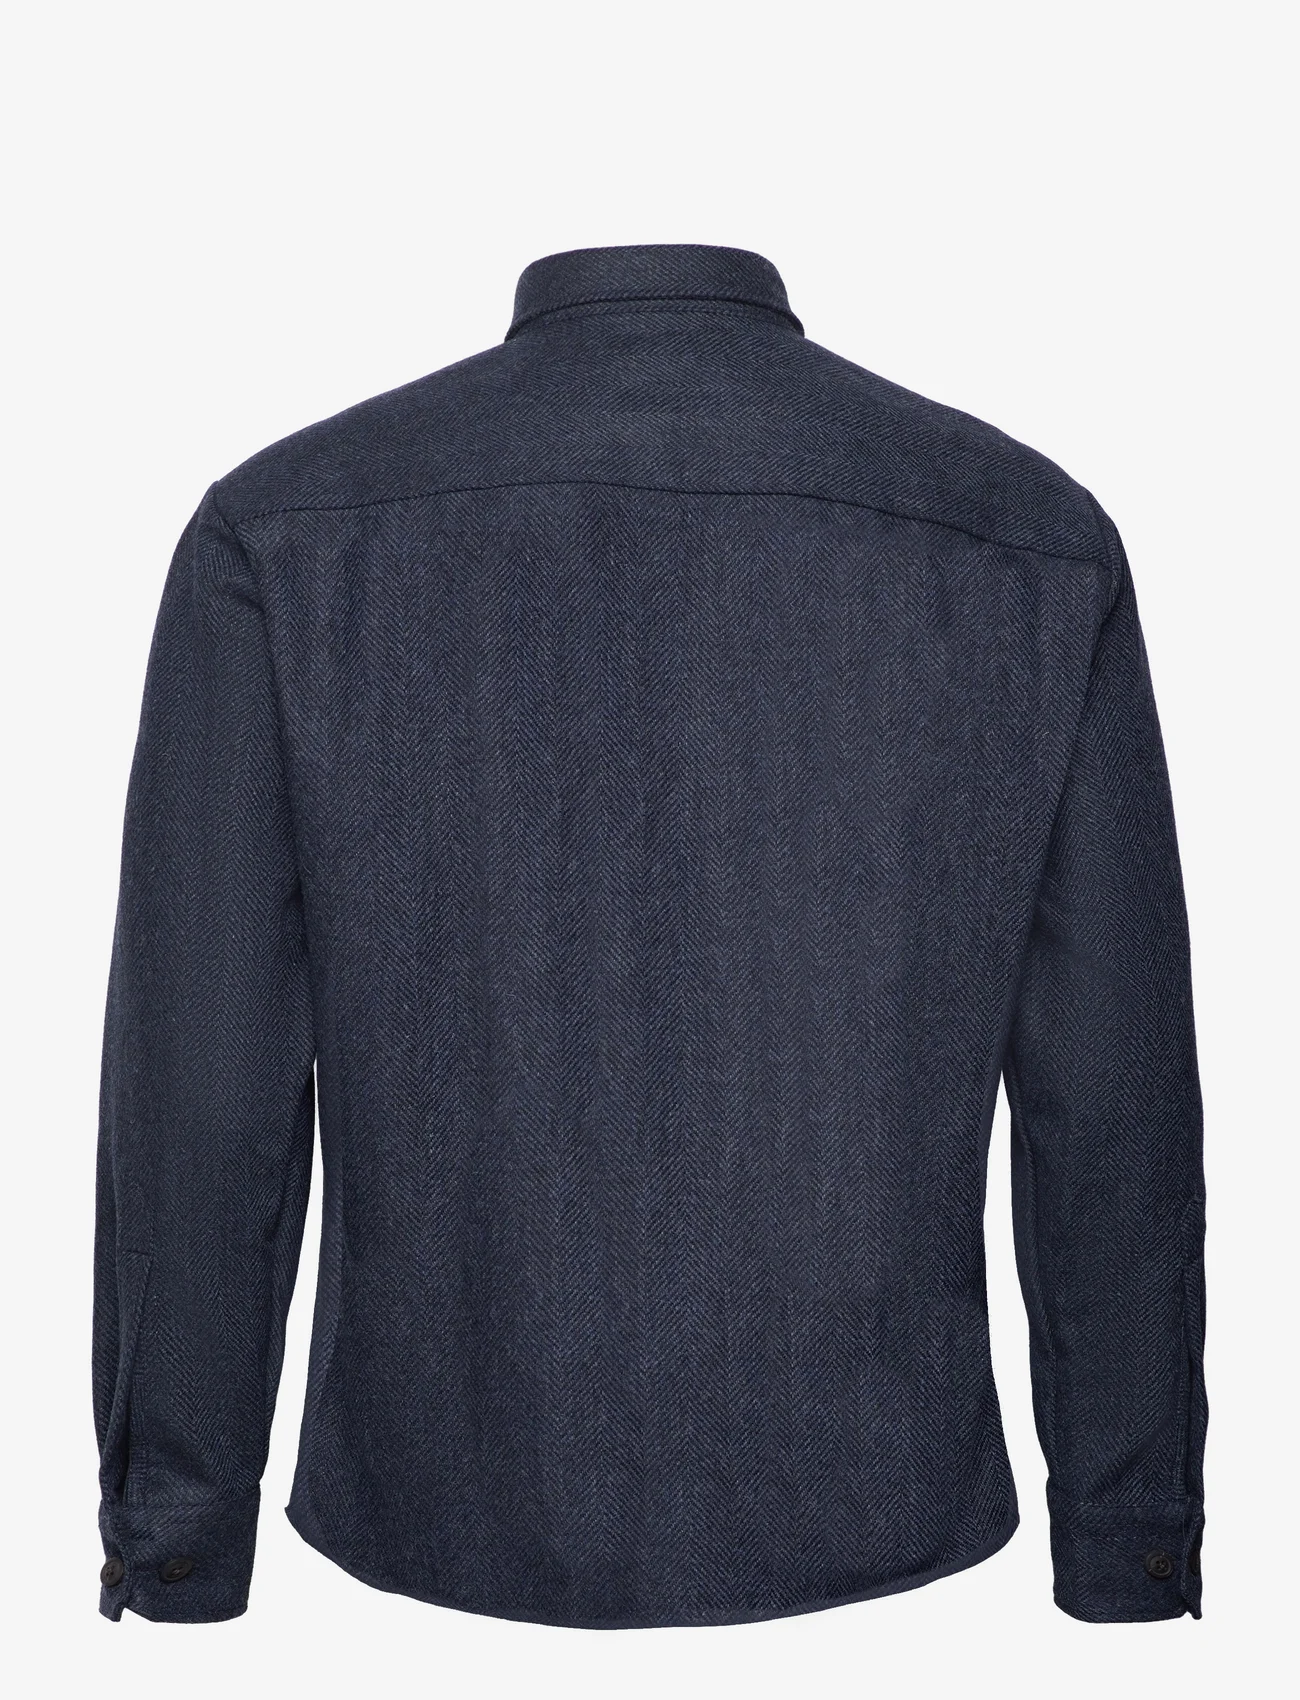 Bosweel Shirts Est. 1937 - Over Shirt - vyrams - dark blue - 1